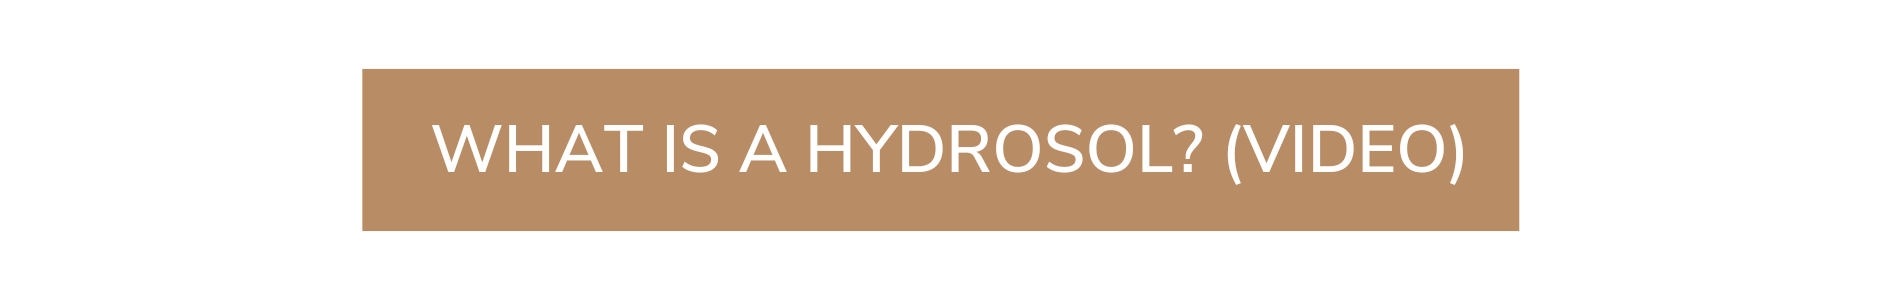 Watch a video explaining Hydrosols